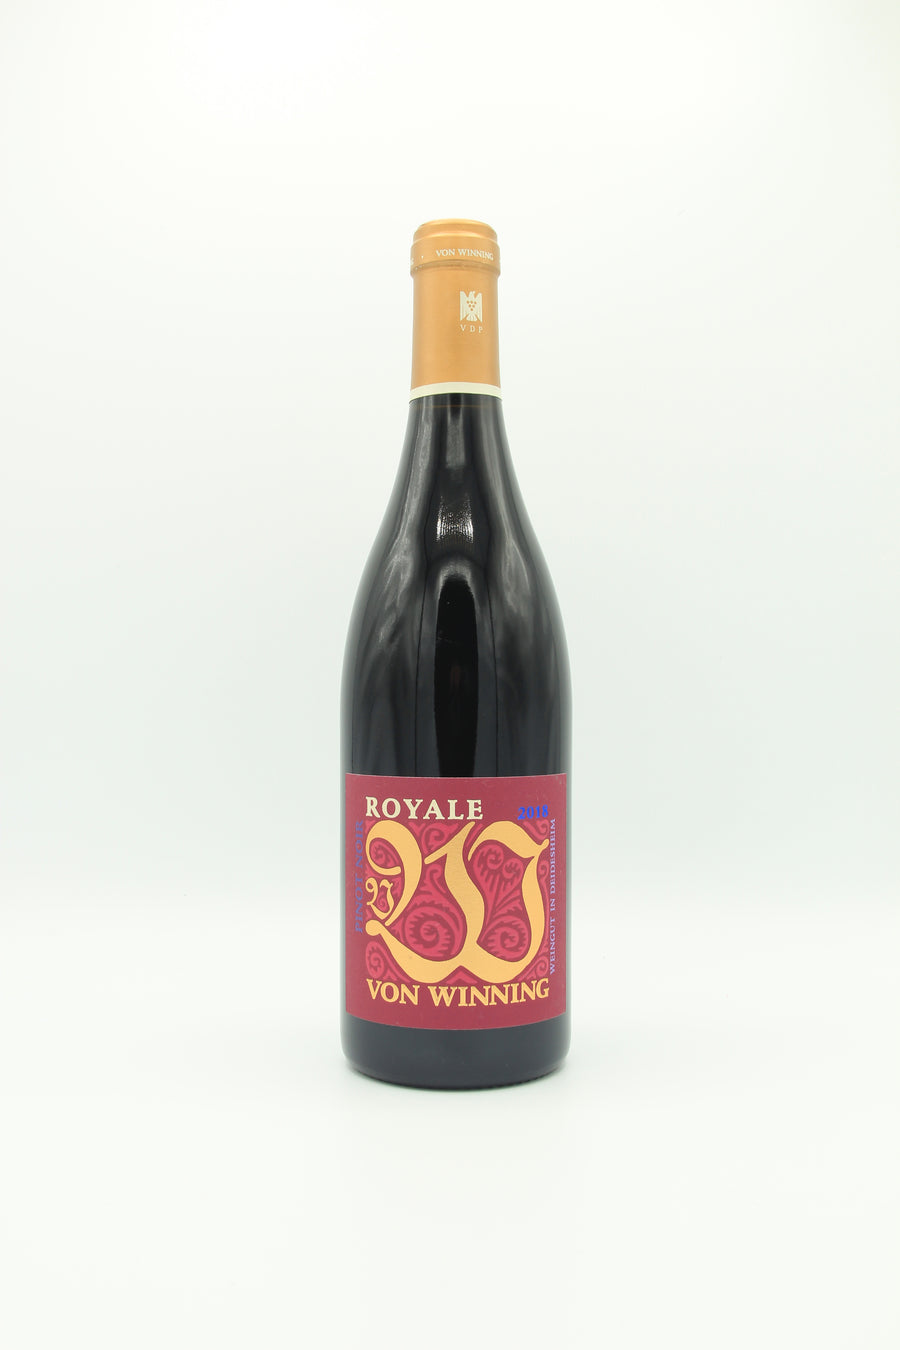 Von Winning Pinot Noir Royale trocken